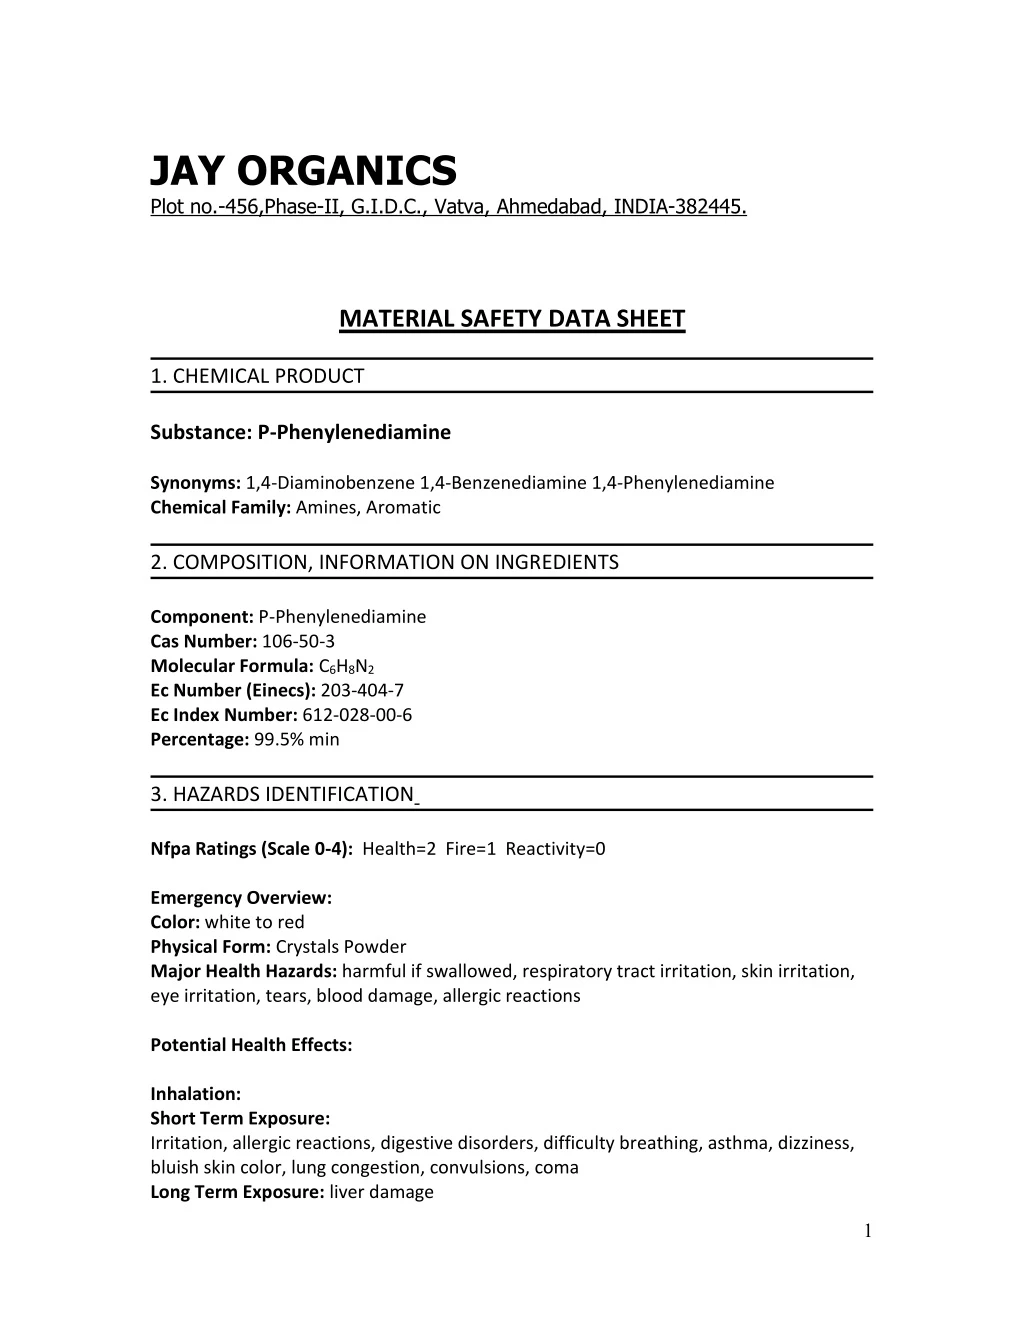 jay organics plot no 456 phase ii g i d c vatva